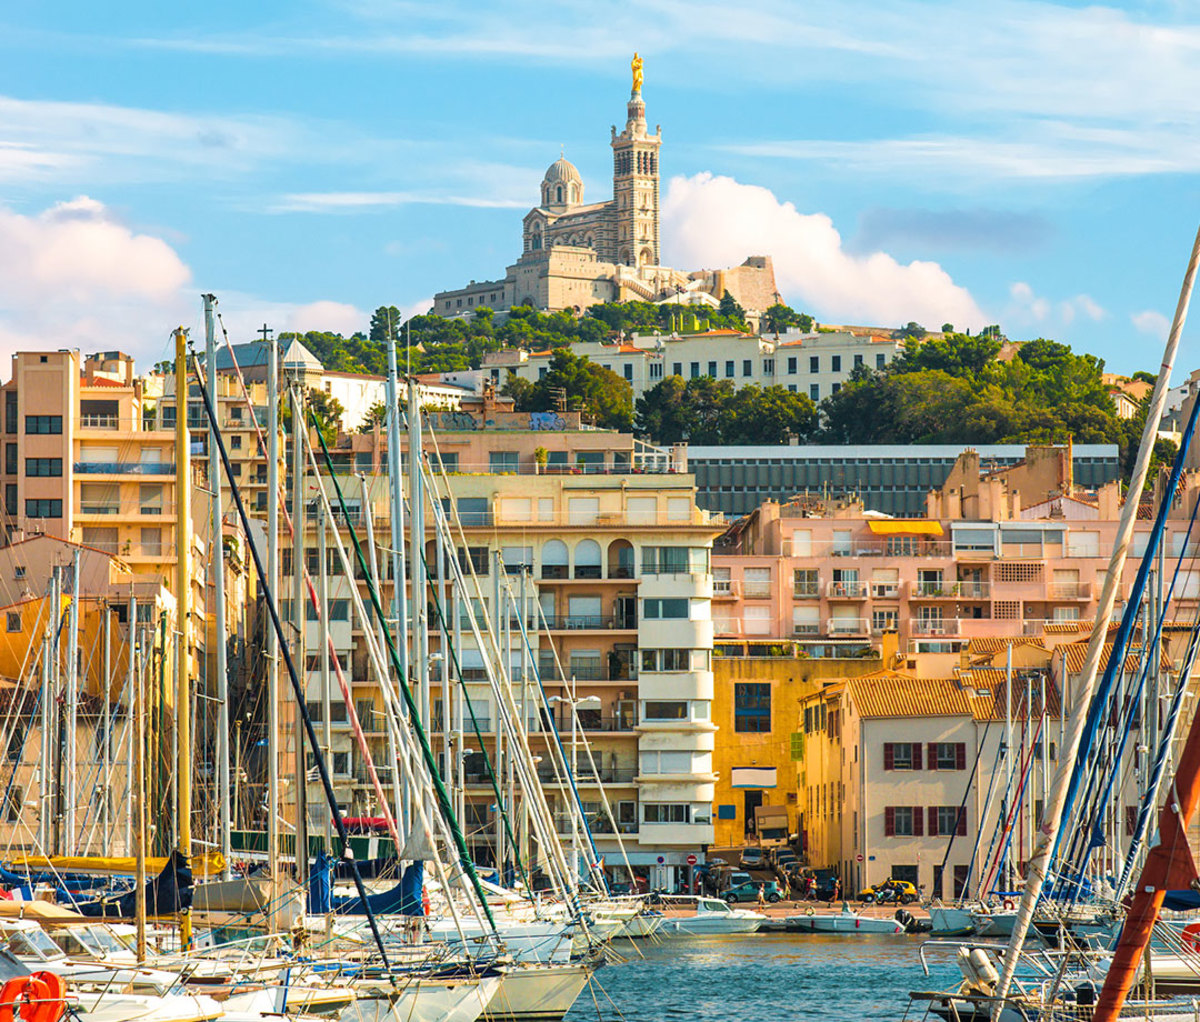 The old Vieux port of Marseille with Notre Dame de la Garde at back